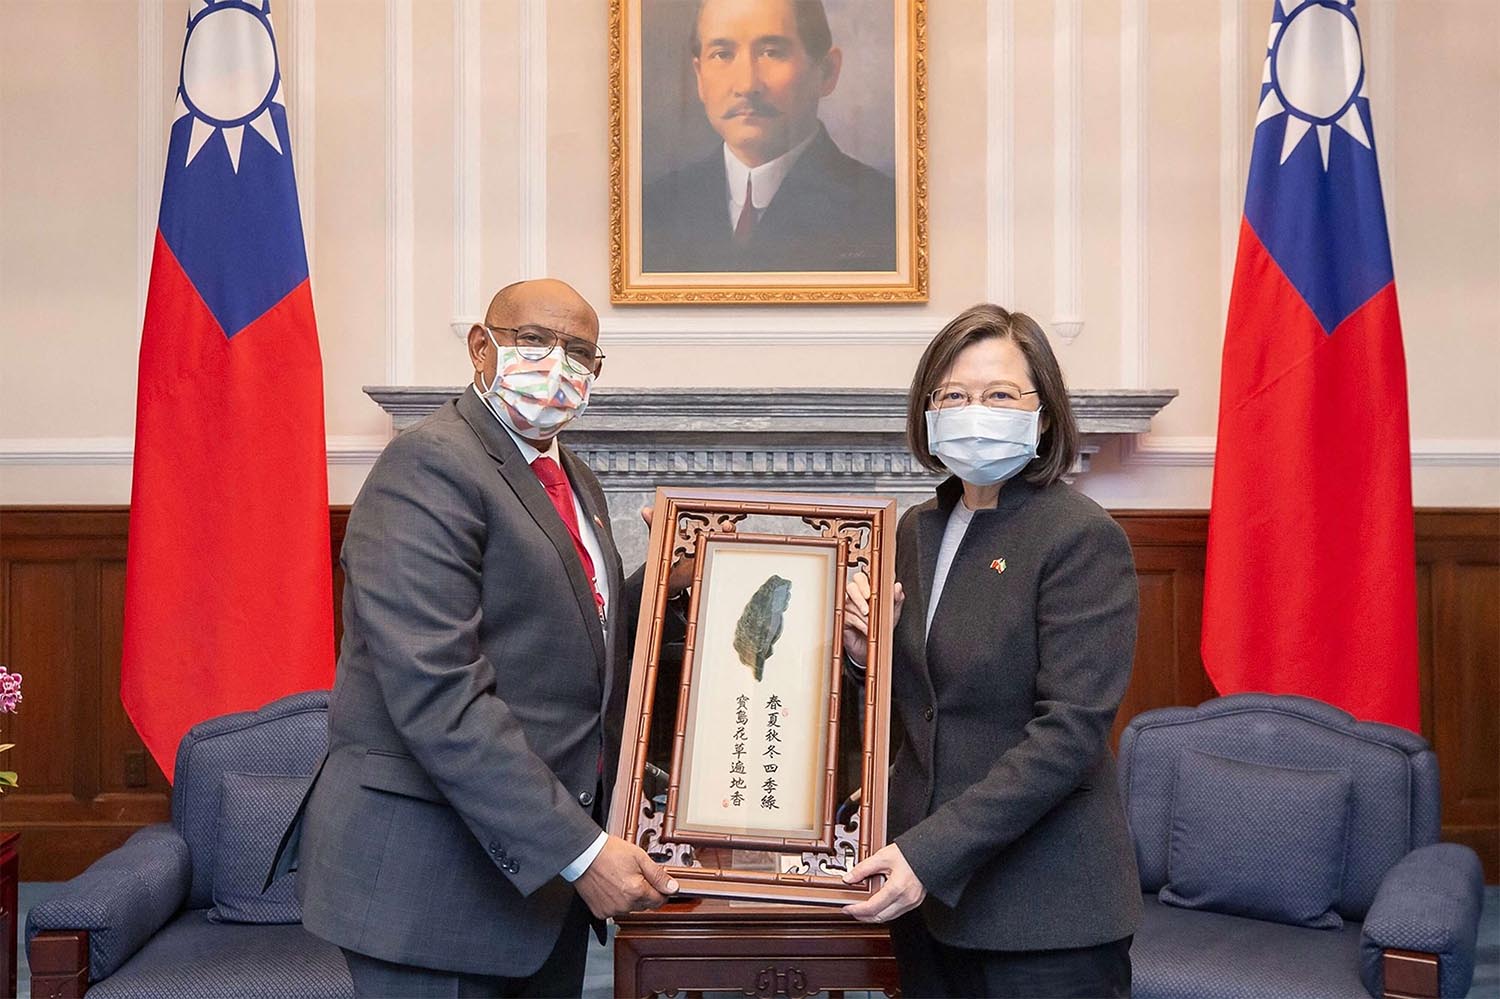 omaliland's FM Essa Kayd Mohamoud (L) with Taiwan's President Tsai Ing-wen 